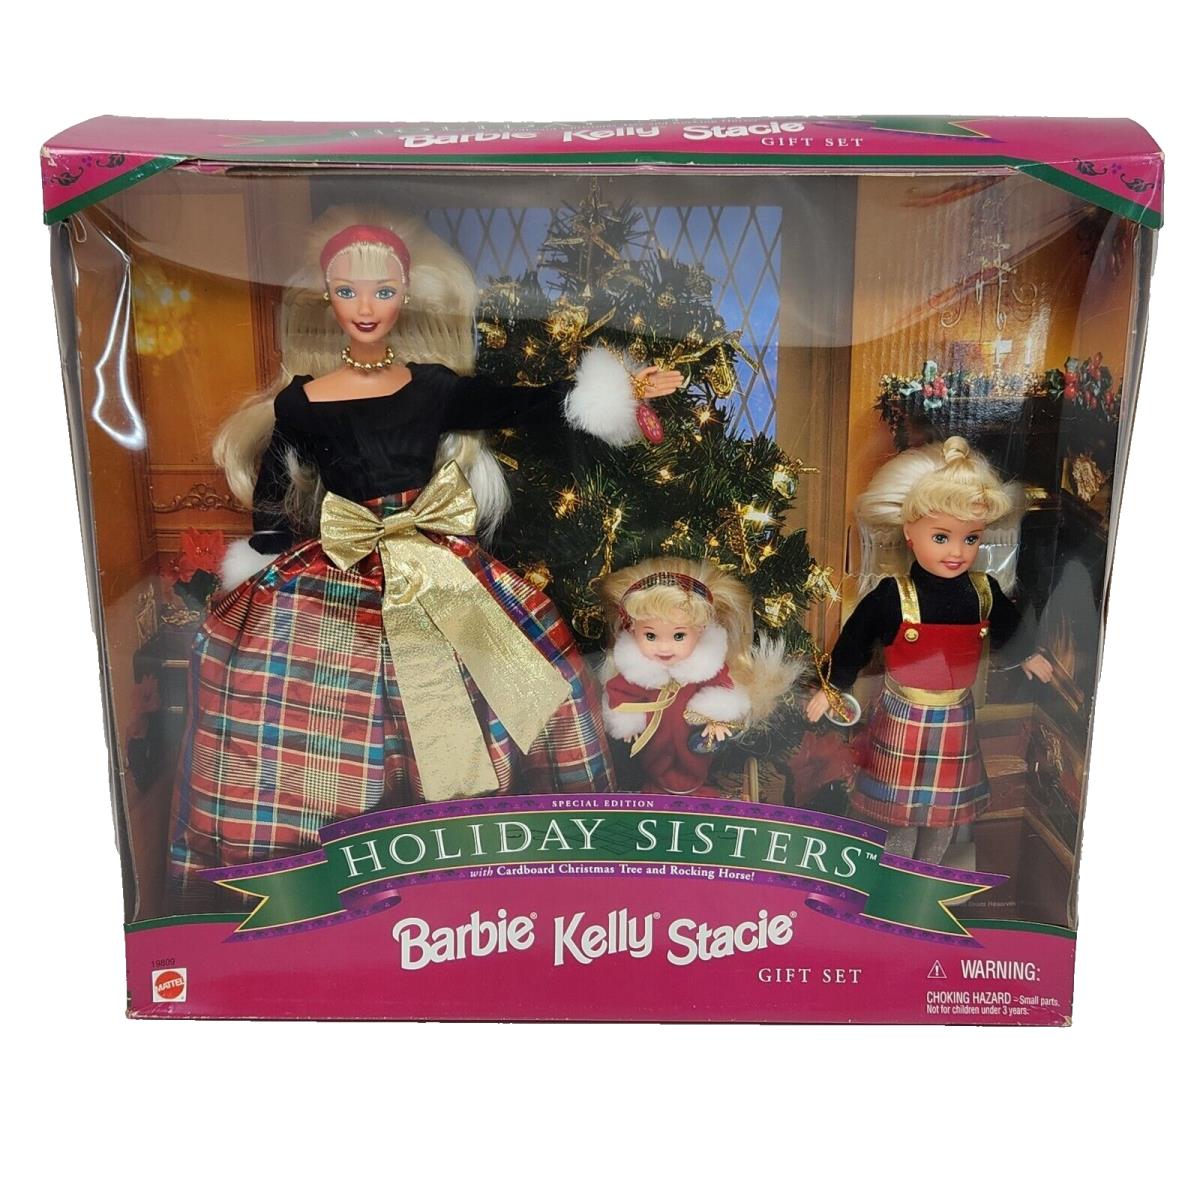 Vintage 1998 Holiday Sisters 19809 Barbie Kelly Stacie Doll Mattel Nos Box